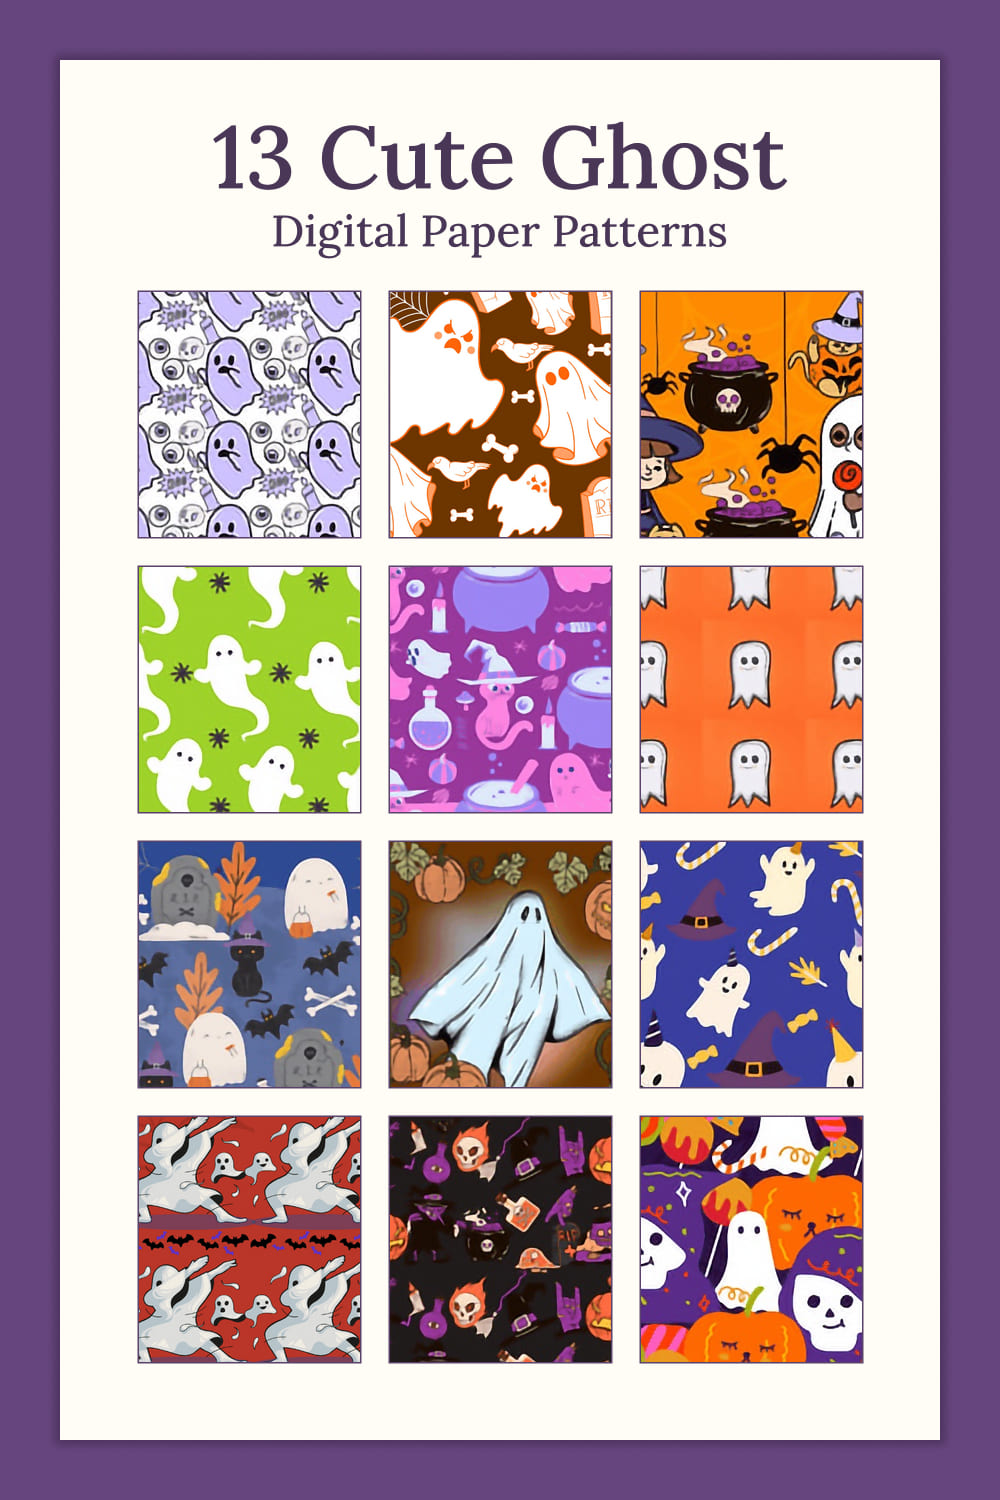 13 Cute Ghost Digital Paper Patterns KDP - Pinterest.